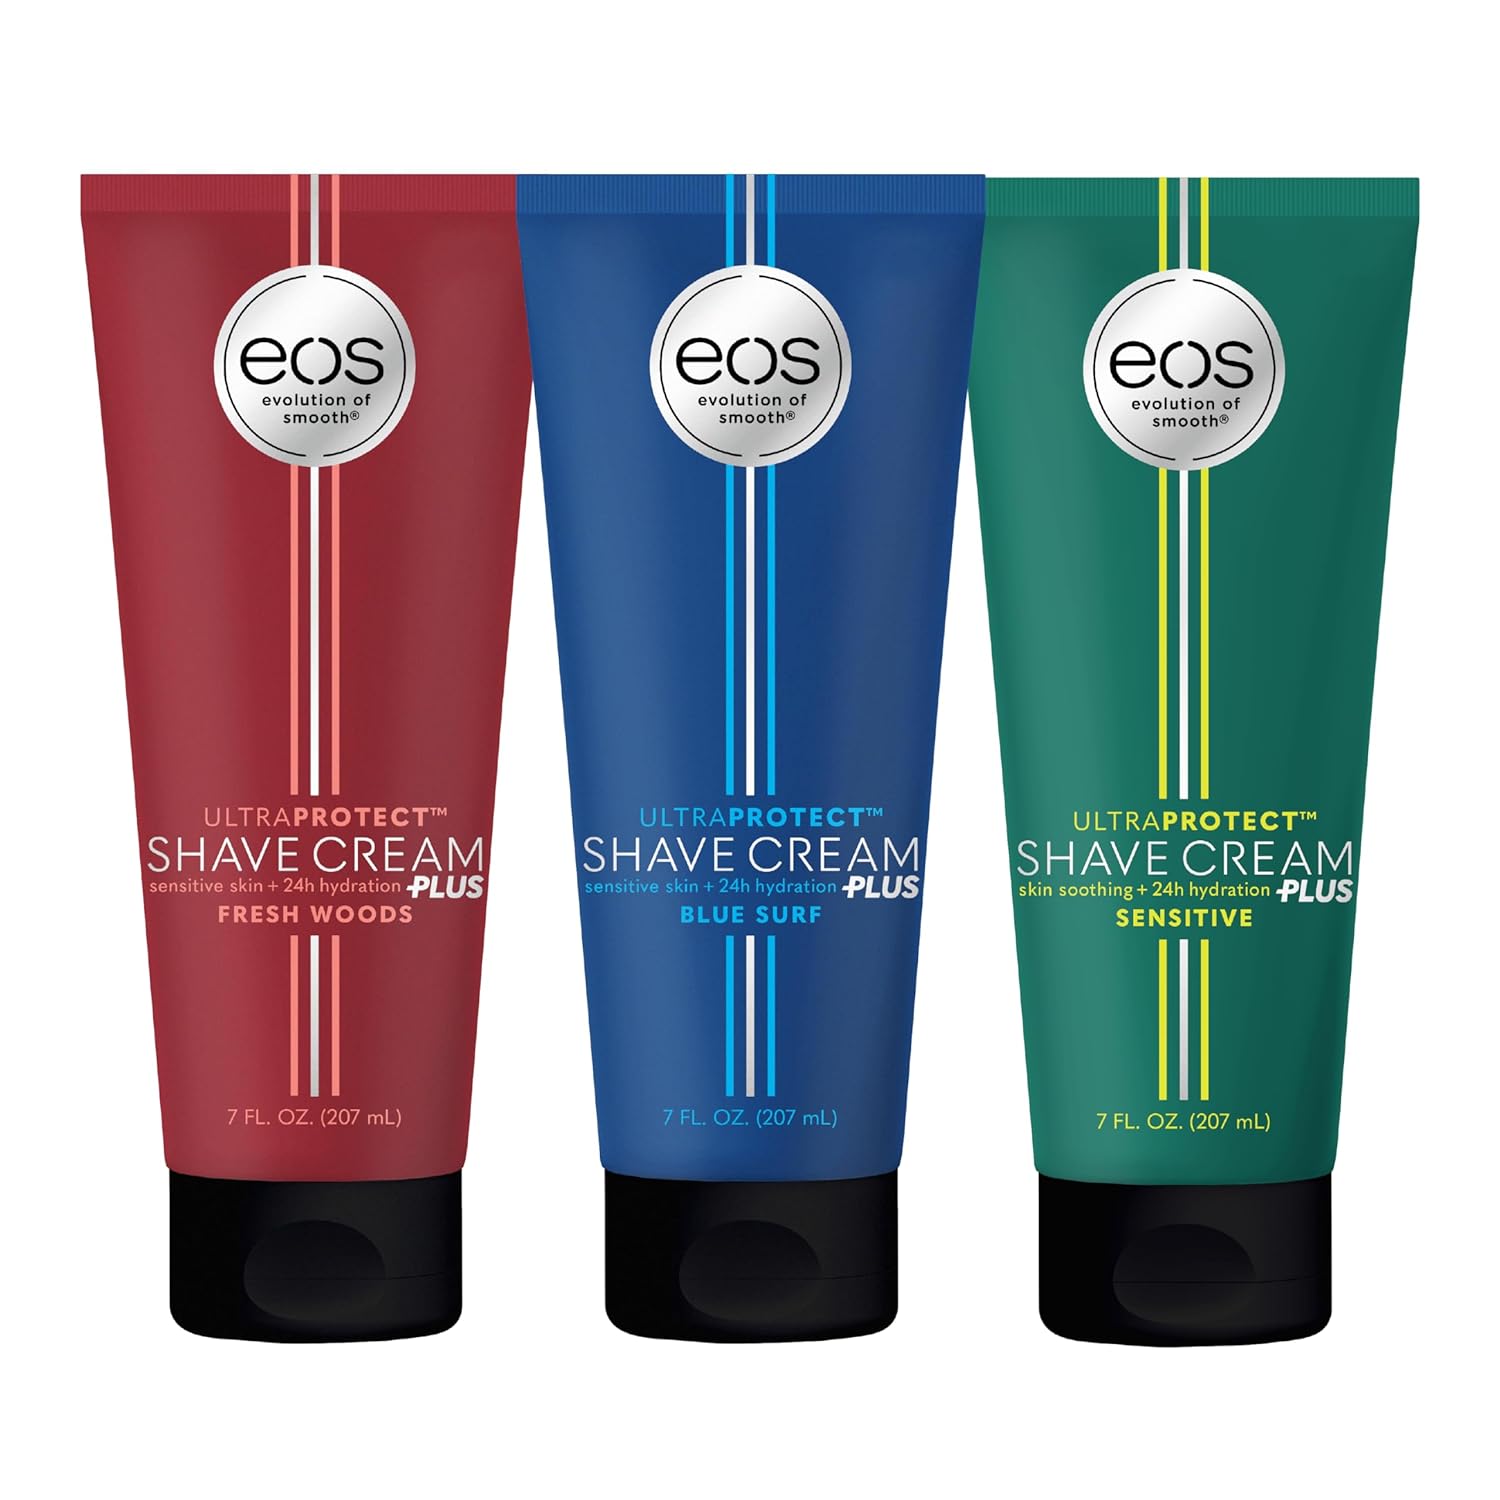 Bundle of eos UltraProtect Men’s Shave Cream- Sensitive, Fresh Woods, Blue Surf- 24-Hour Hydration, Non-Foaming Formula, 7 fl oz